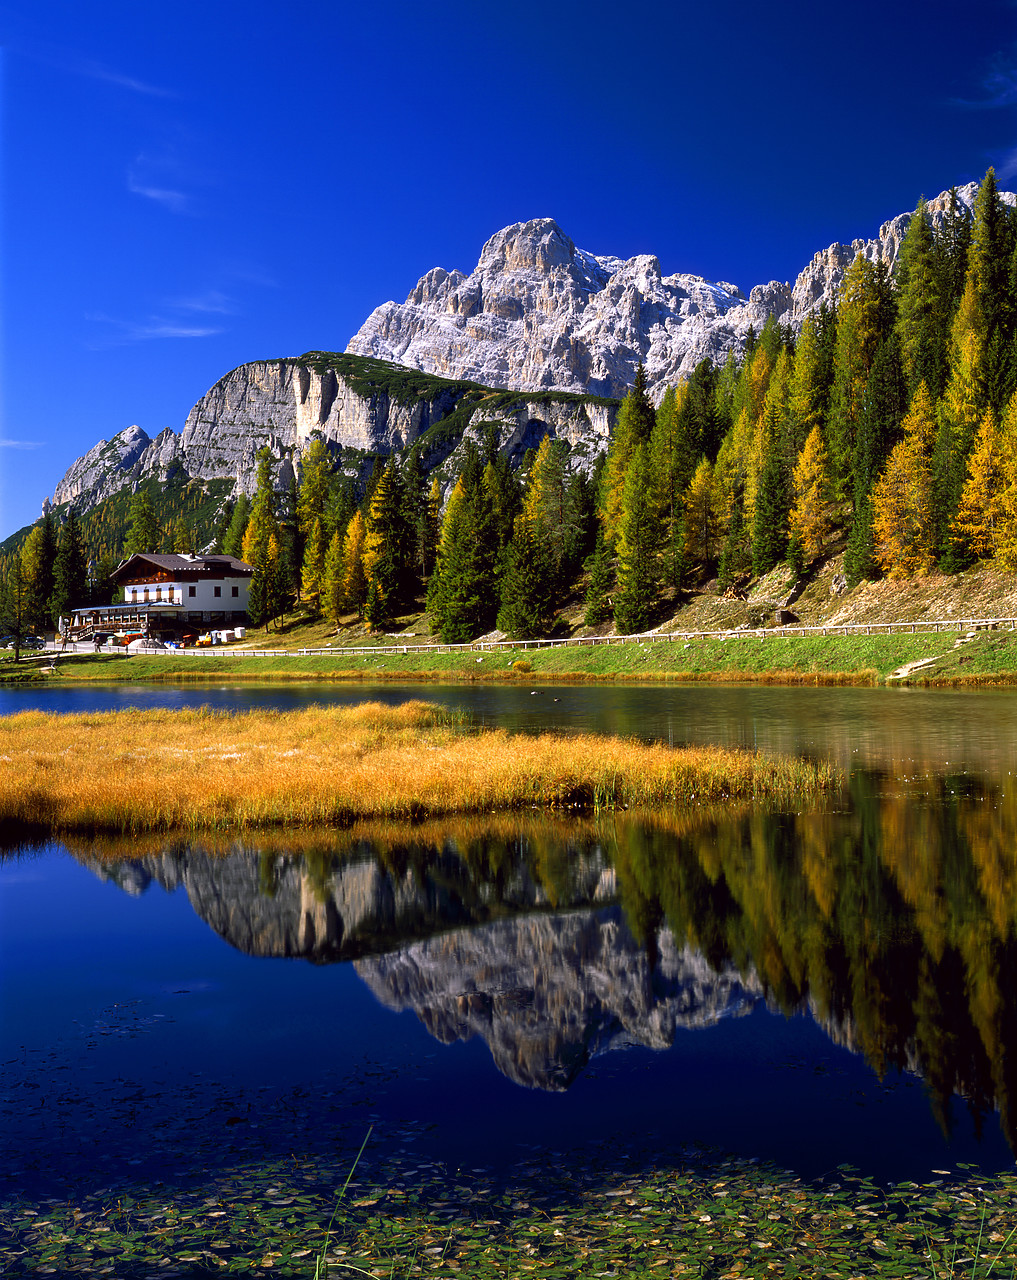 #060608-6 - Lake Antorno Reflections, Dolomites, Italy